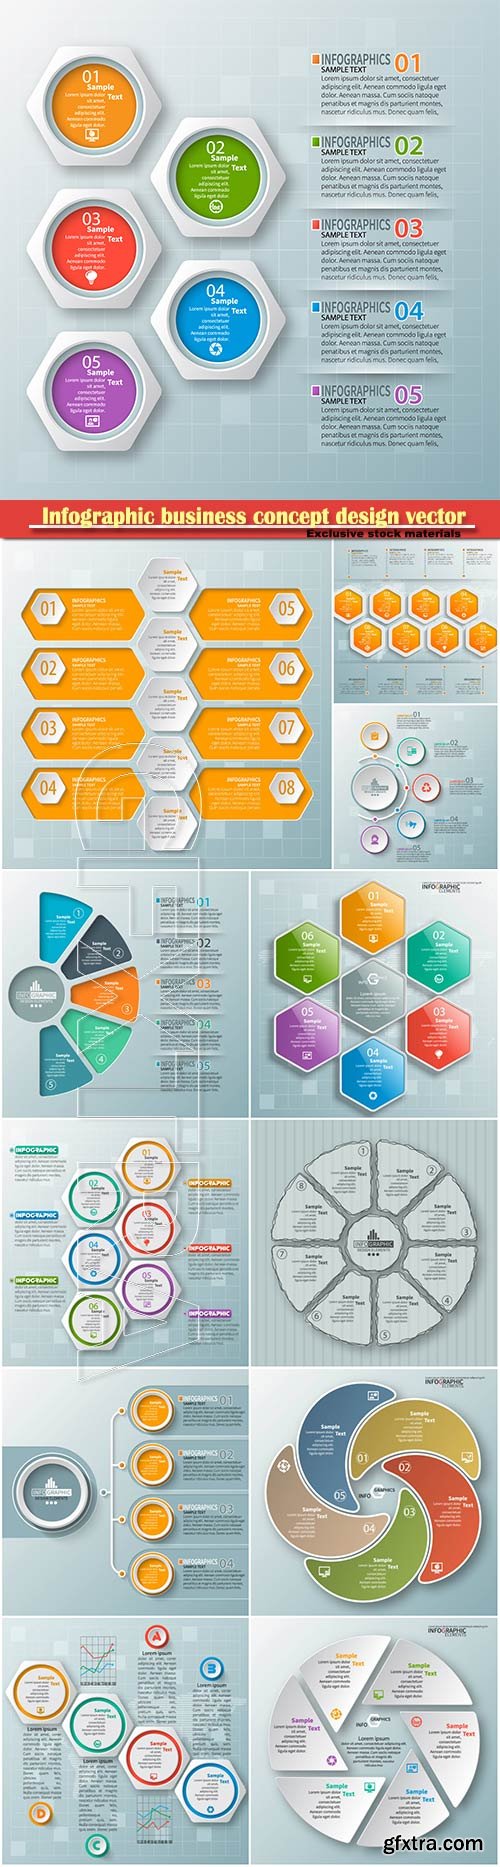 Infographic business concept design vector illustration # 4